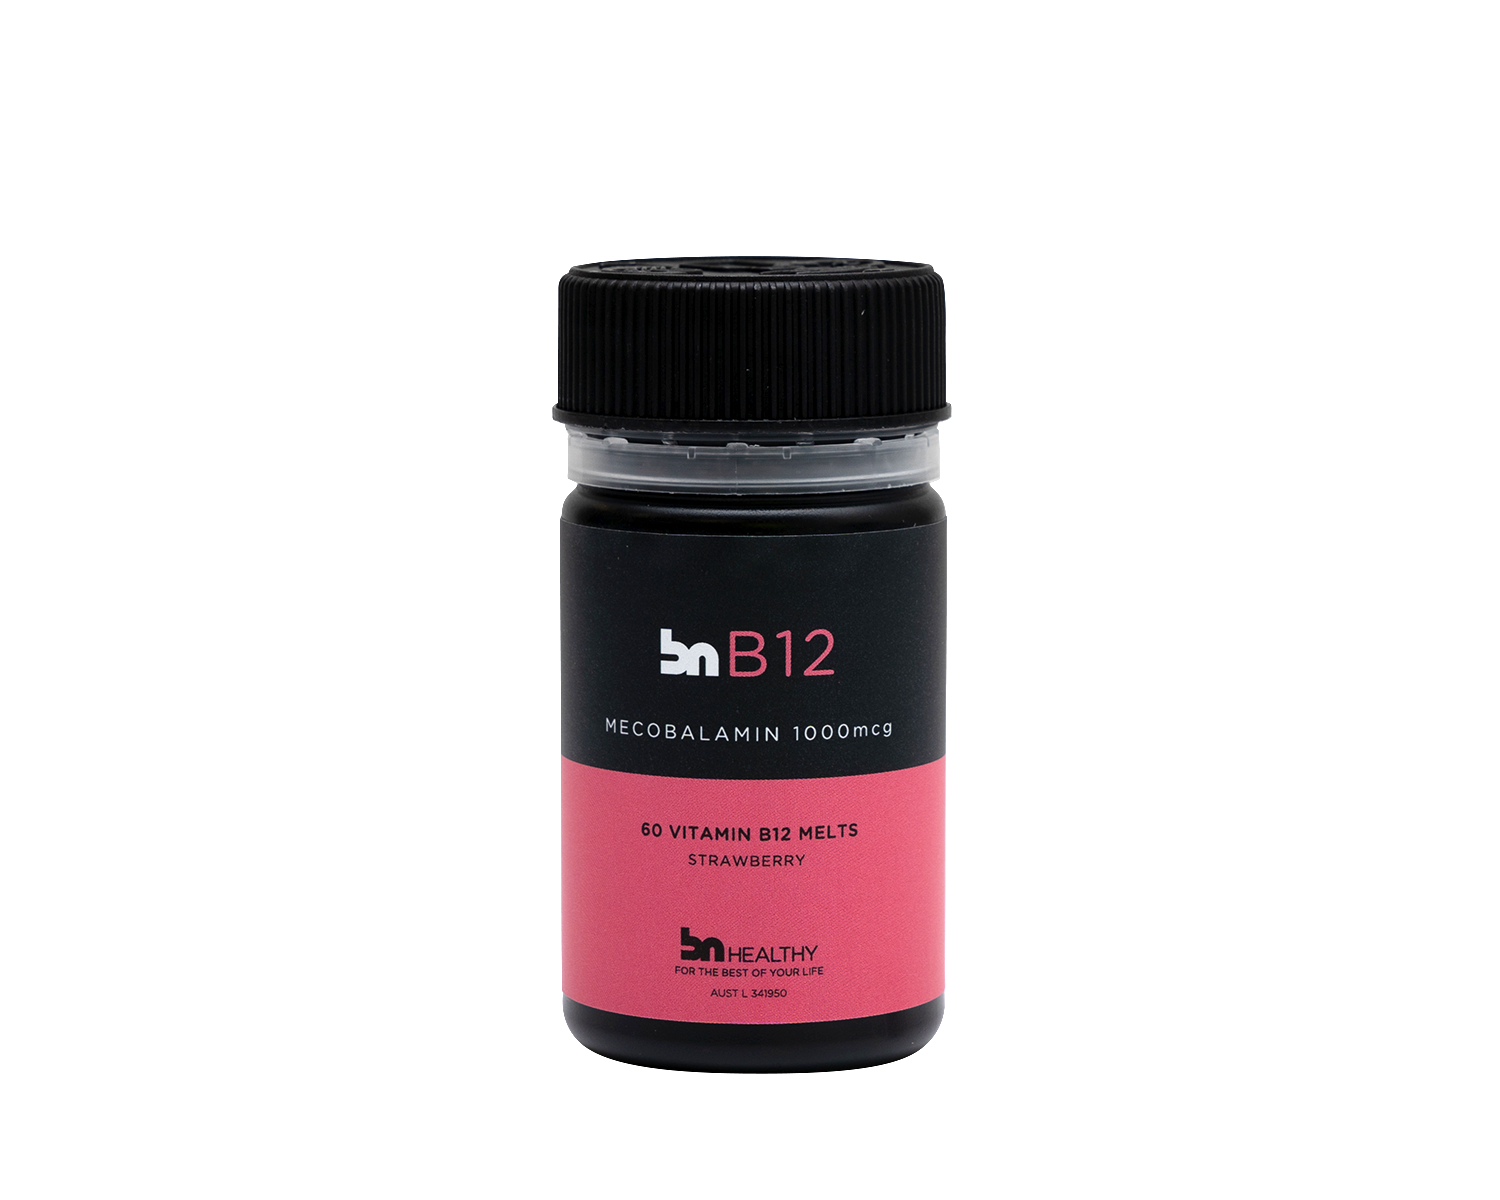 BN B12 - Vitamin B12 Melts - 3 Month Subscription - Save 15%